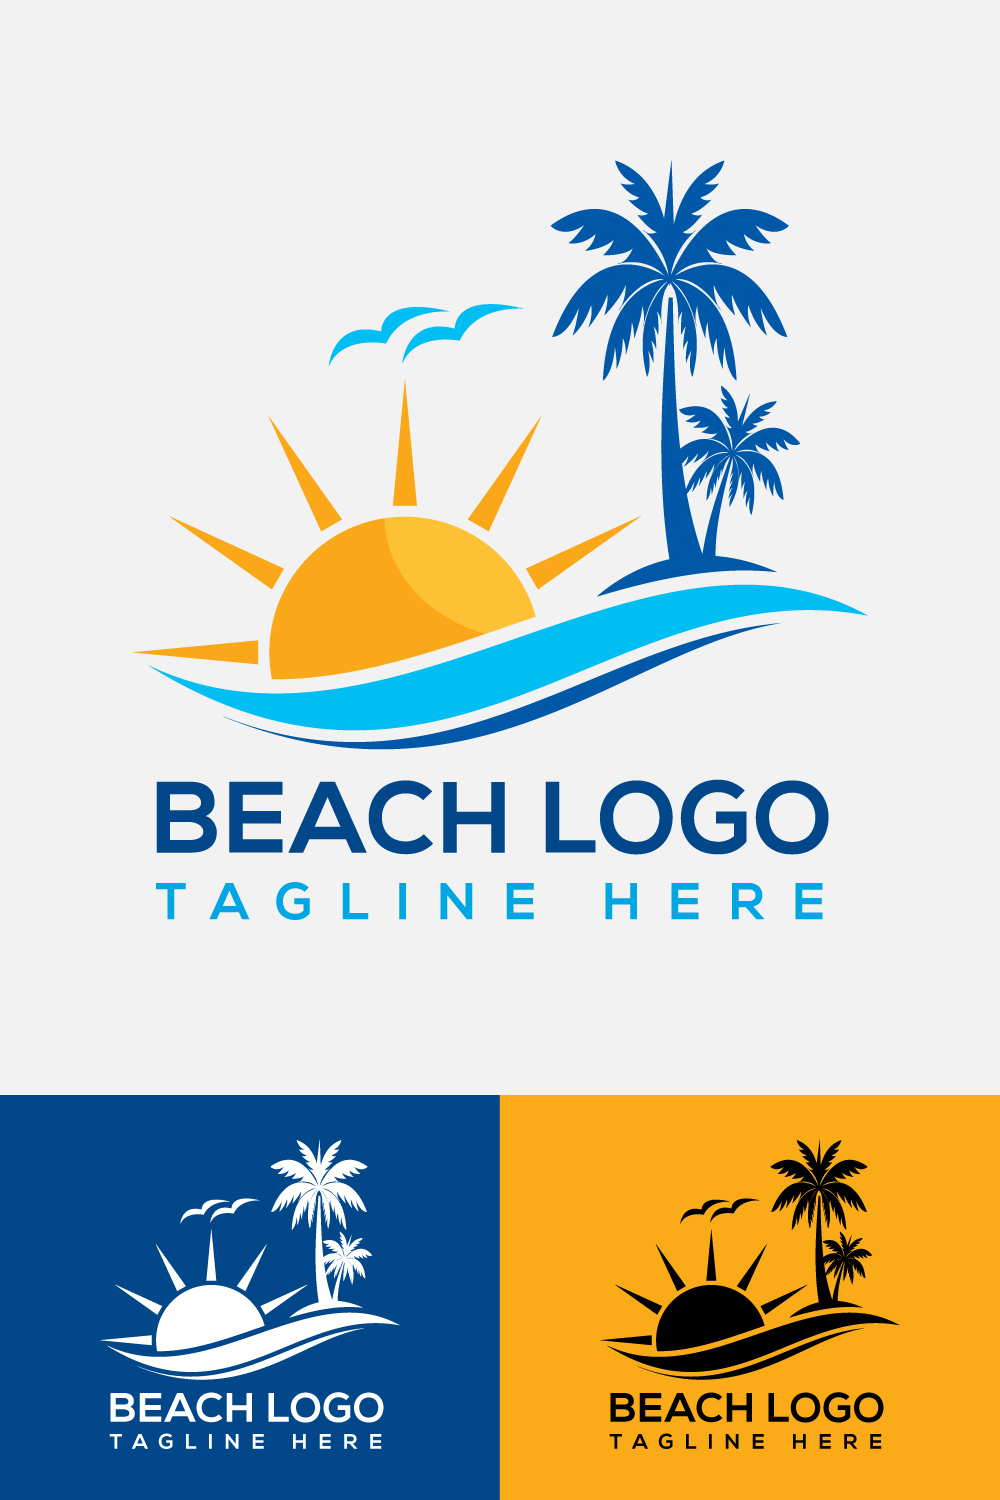 Tropical Beach Simple Logo pinterest image.